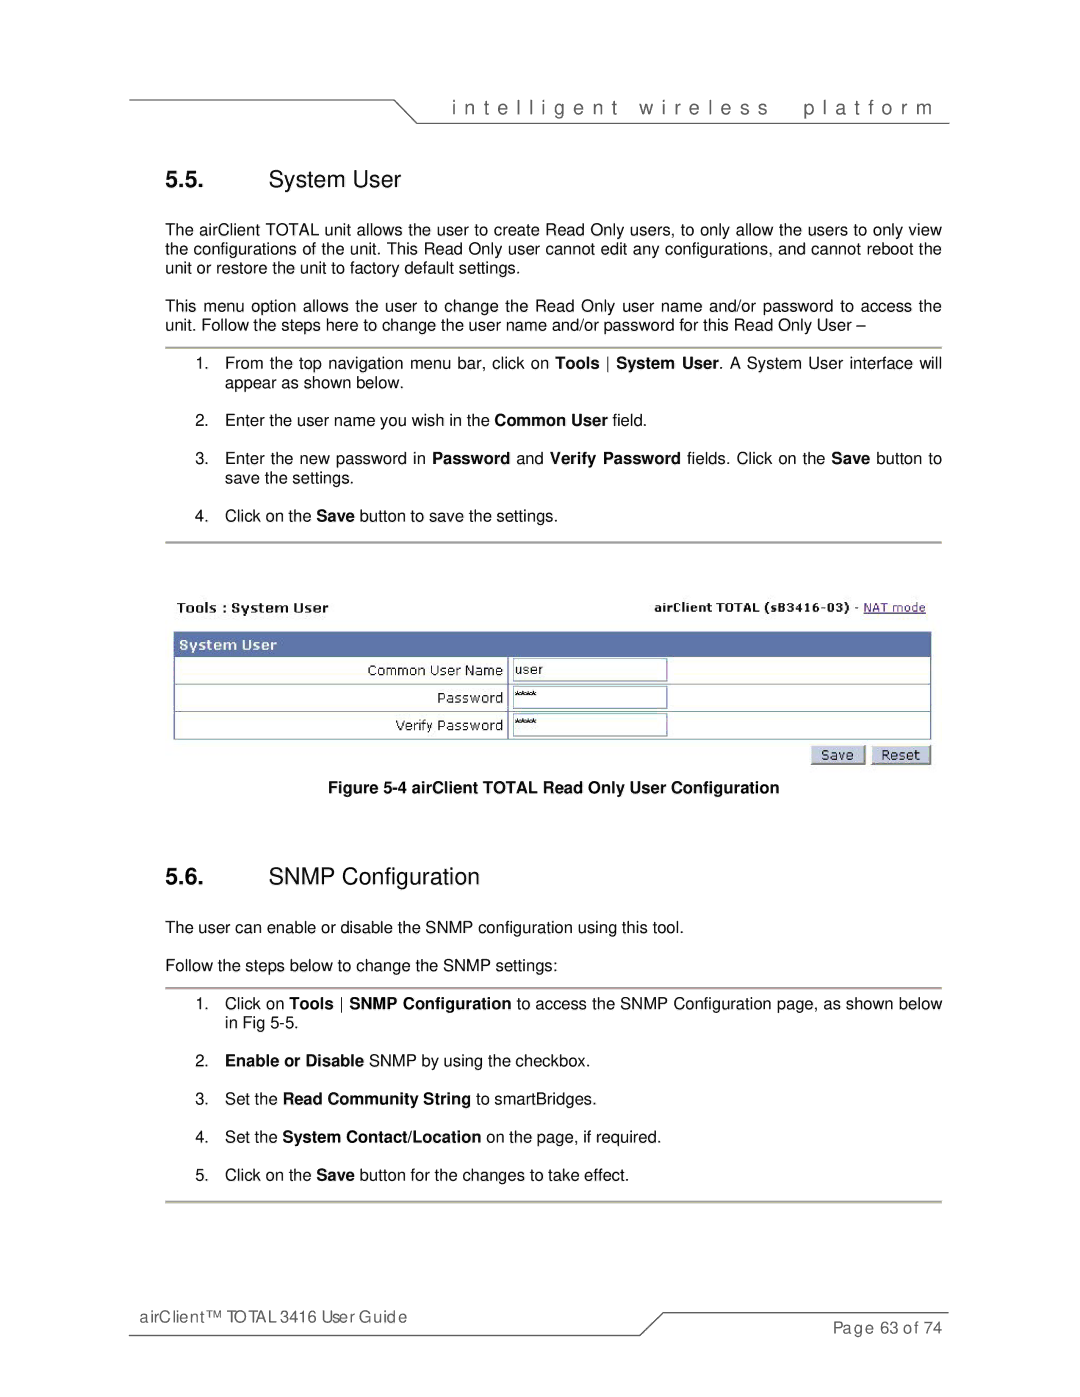 SmartBridges sB3416-03, sB3416-01, sB3416-02 manual System User, Snmp Configuration 